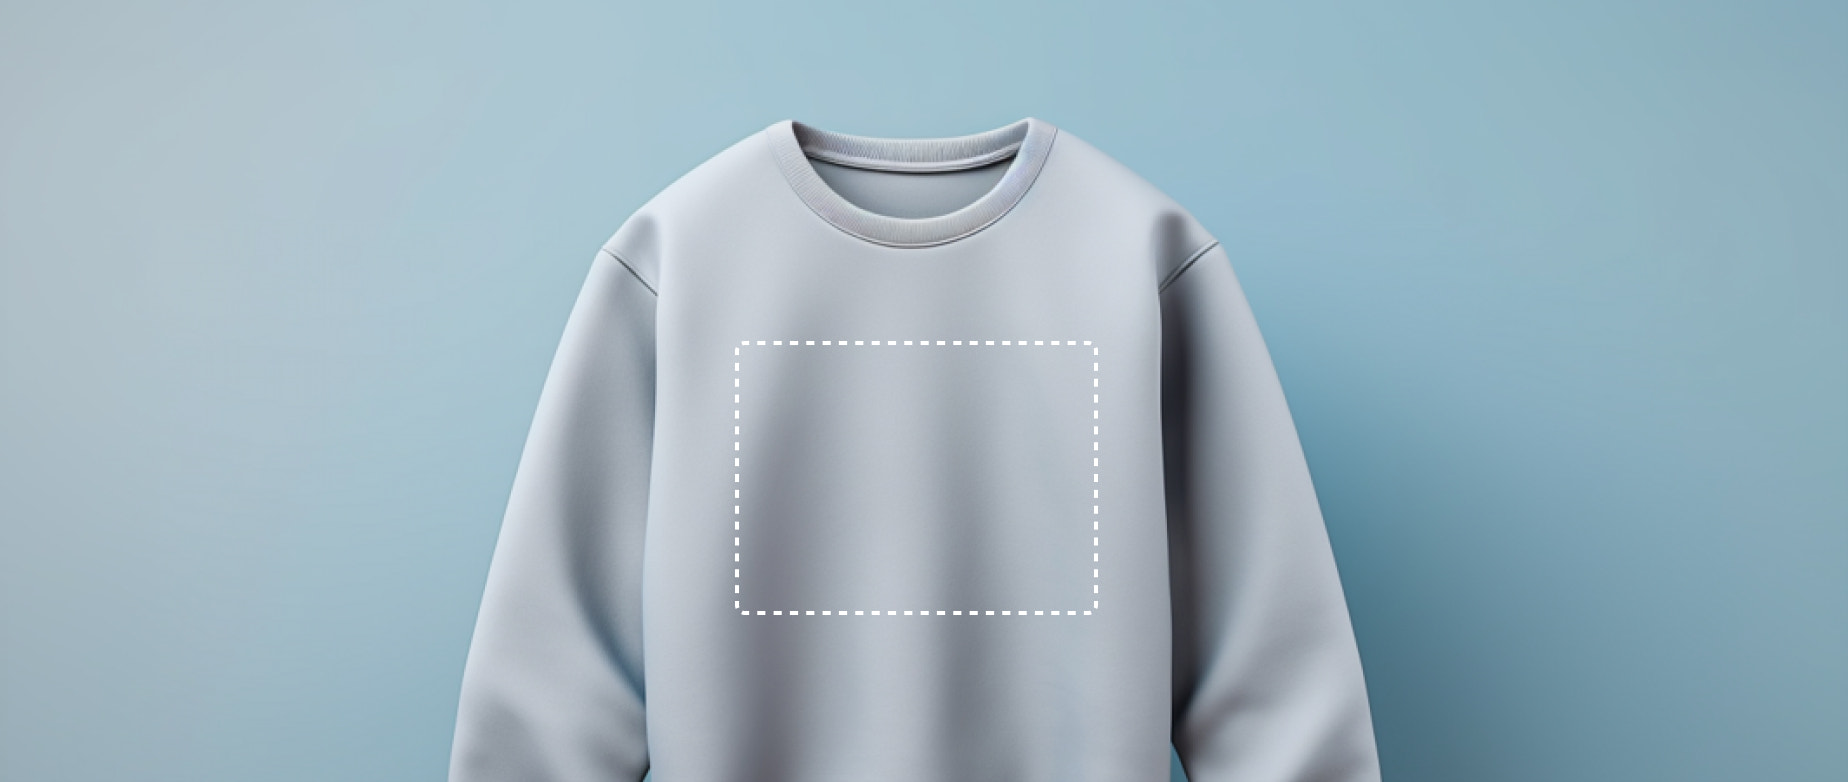 Human Made Printed S/S Sweatshirt Navy